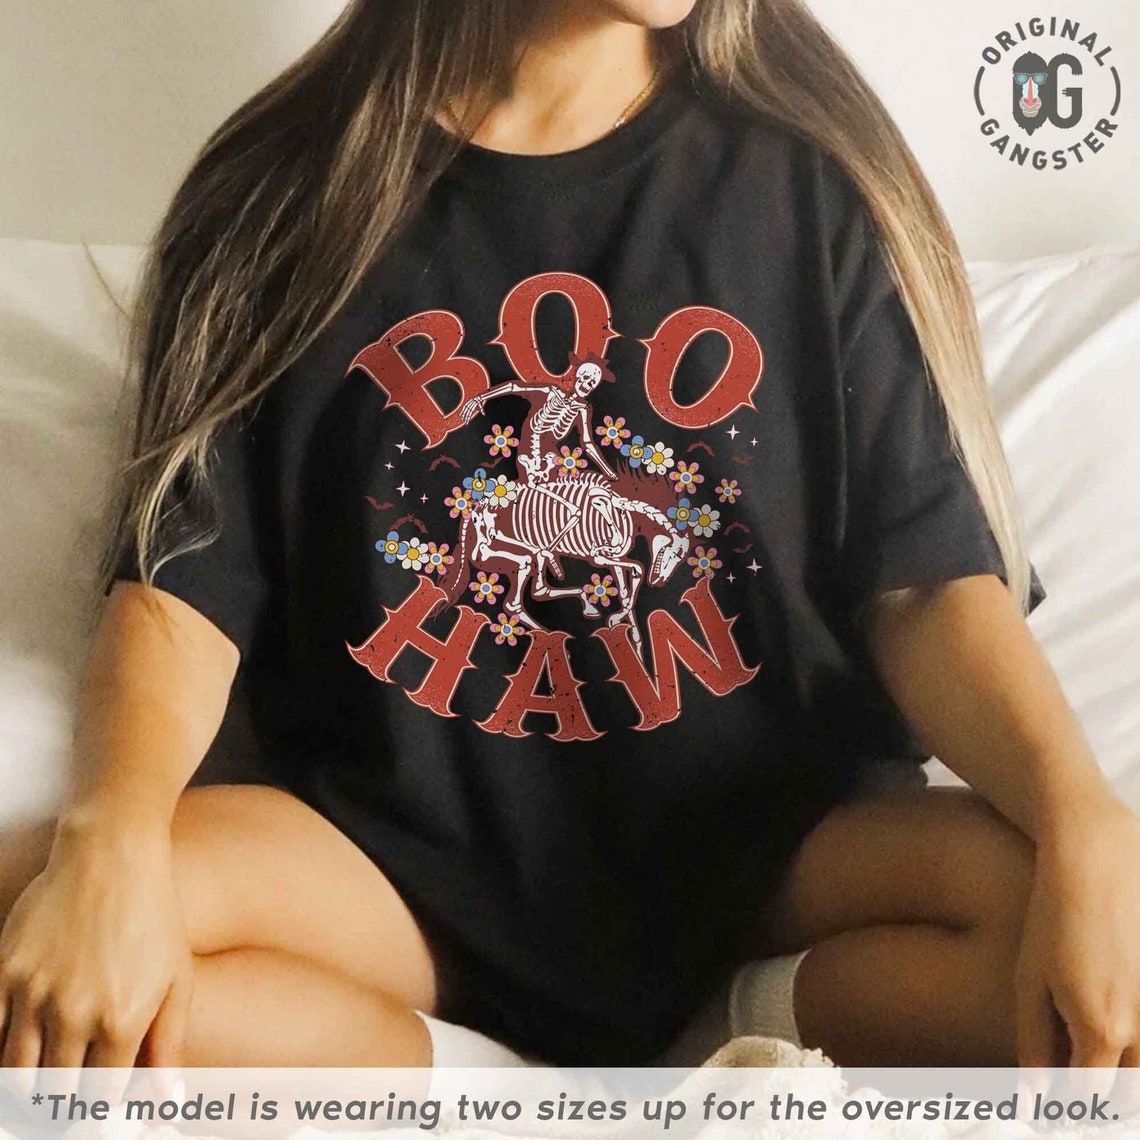 Boo Haw Western Shirt, Ghost Halloween Shirt, Retro Halloween Shirt, Ghost Cowboy Shirt, Fall Graphic Tee, Cute Country Spooky shirt